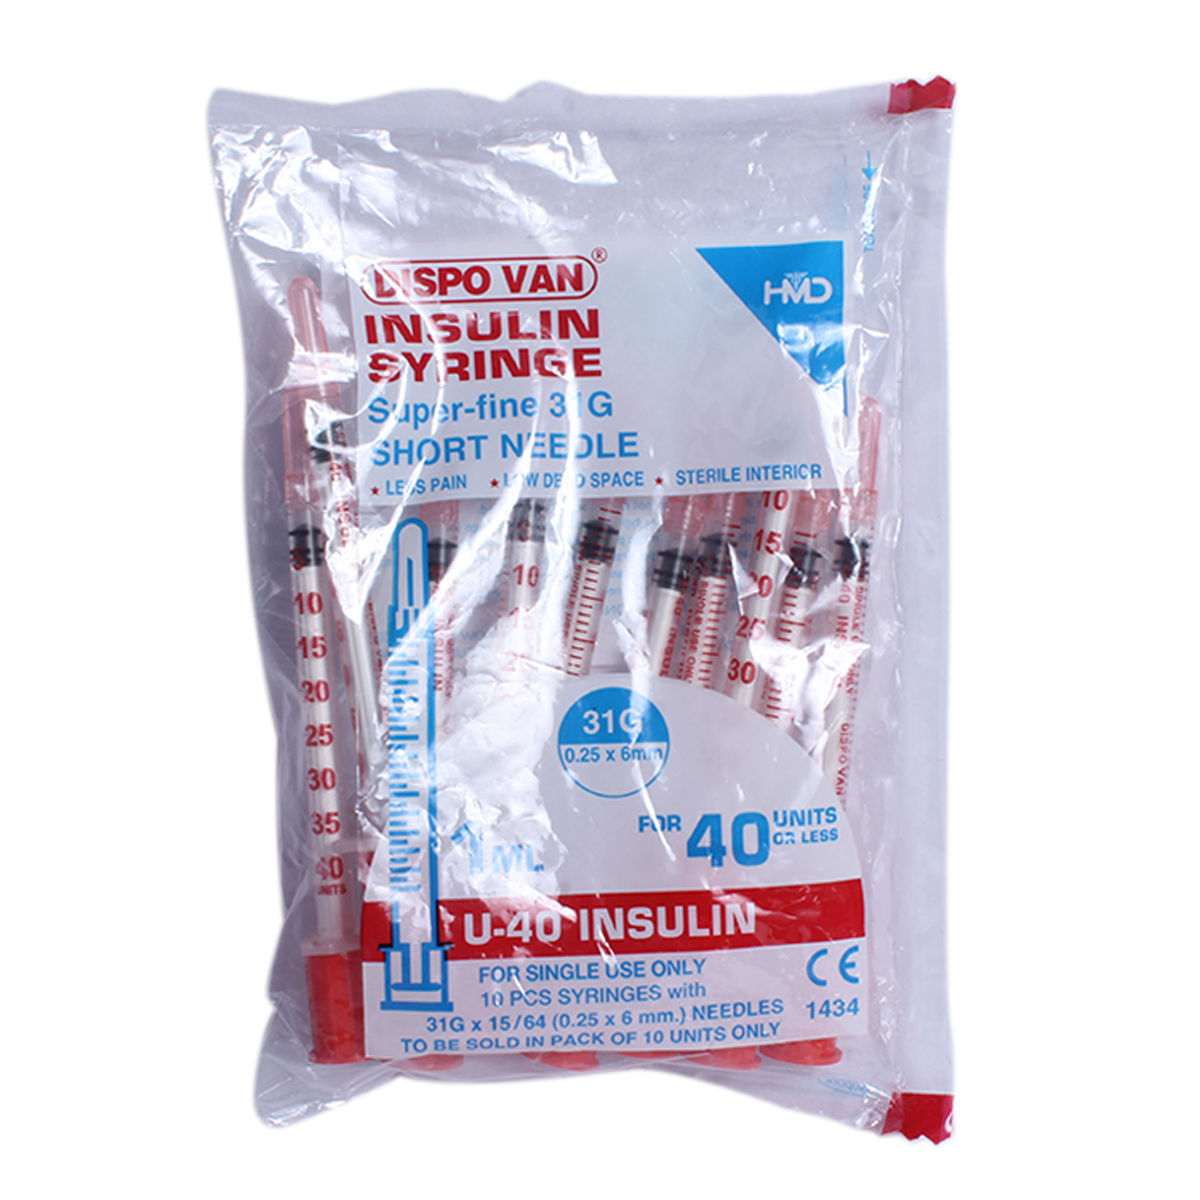 Buy Dispovan 1ml 40IU Insulin Syringe 30G 10's Online